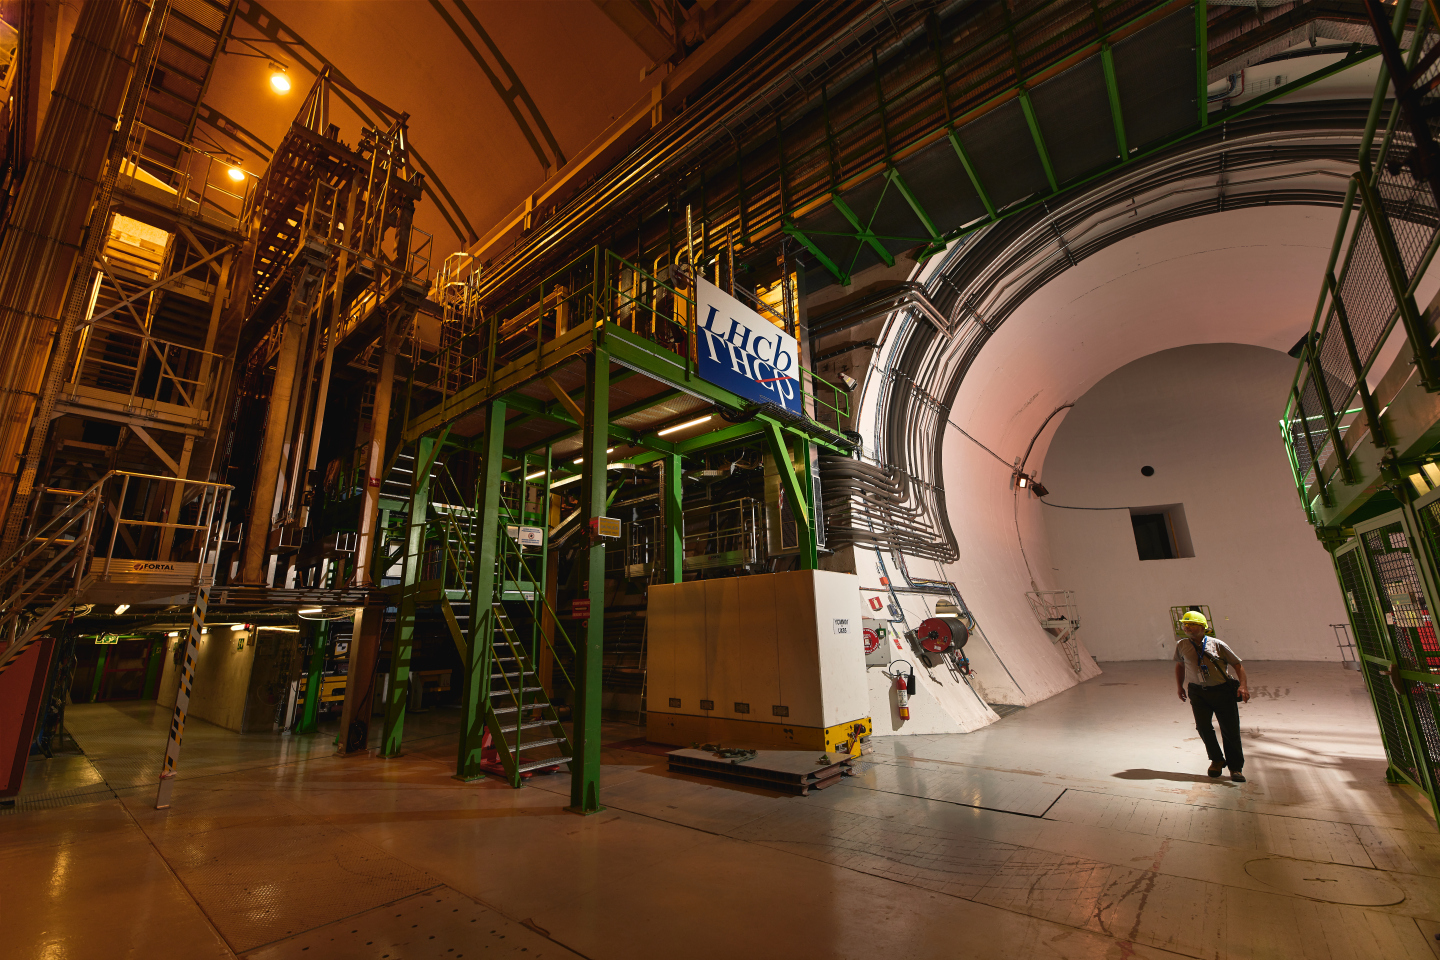 L’expérience LHCb au CERN. (Image : CERN)